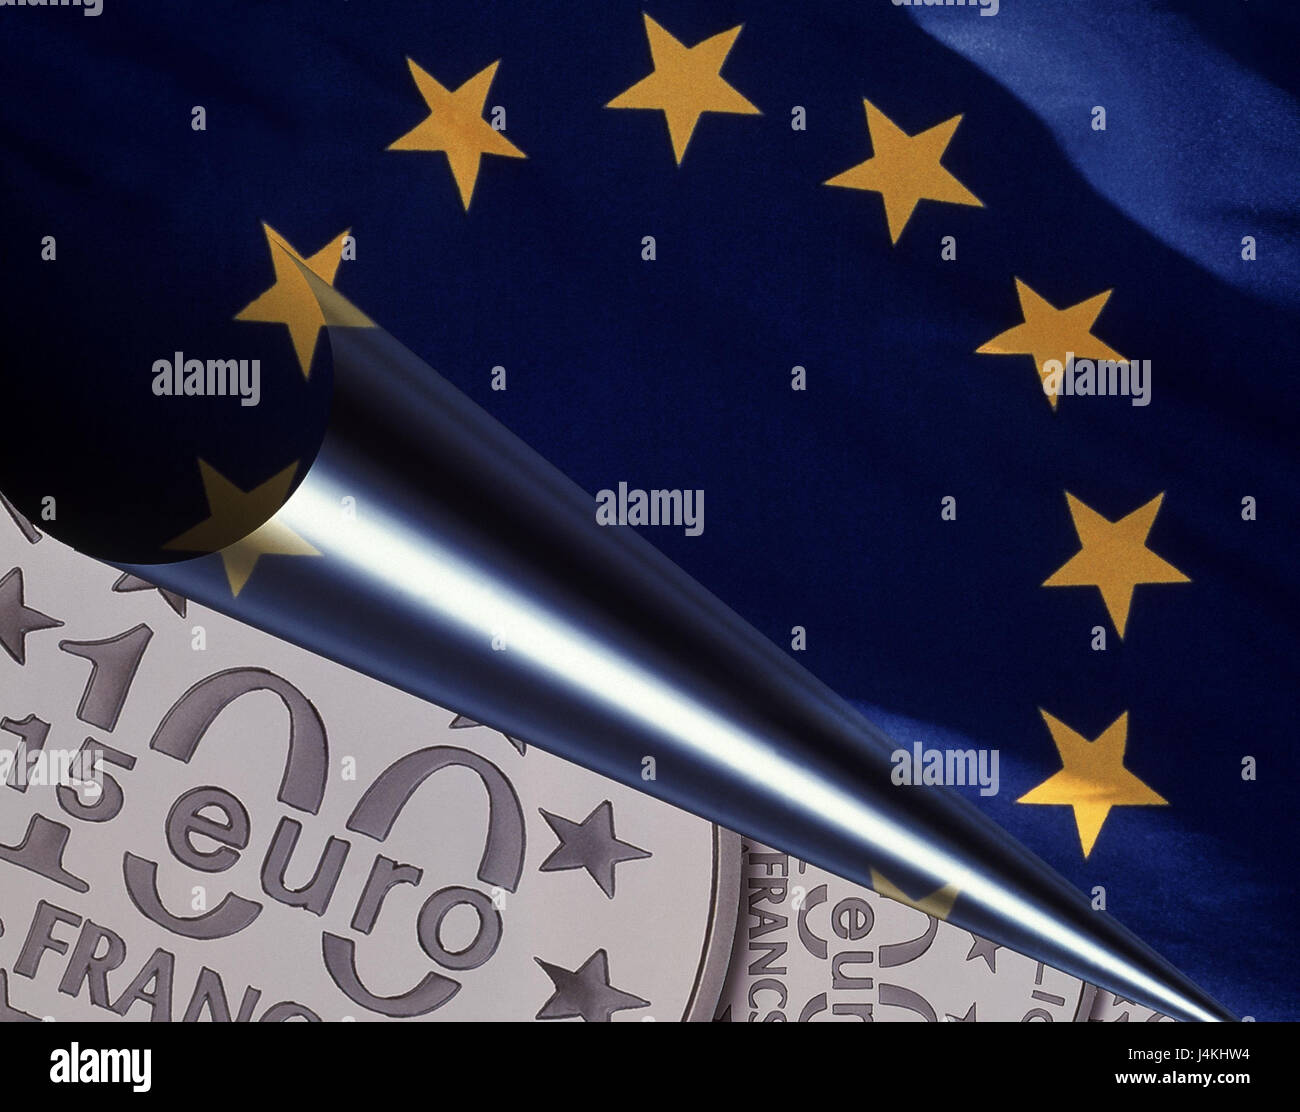 Icono, la unión monetaria, la bandera europea, las monedas de euro [M] la política monetaria, la moneda única, la moneda, la UE, la bandera europea, bandera, euro, monedas, dinero Foto de stock